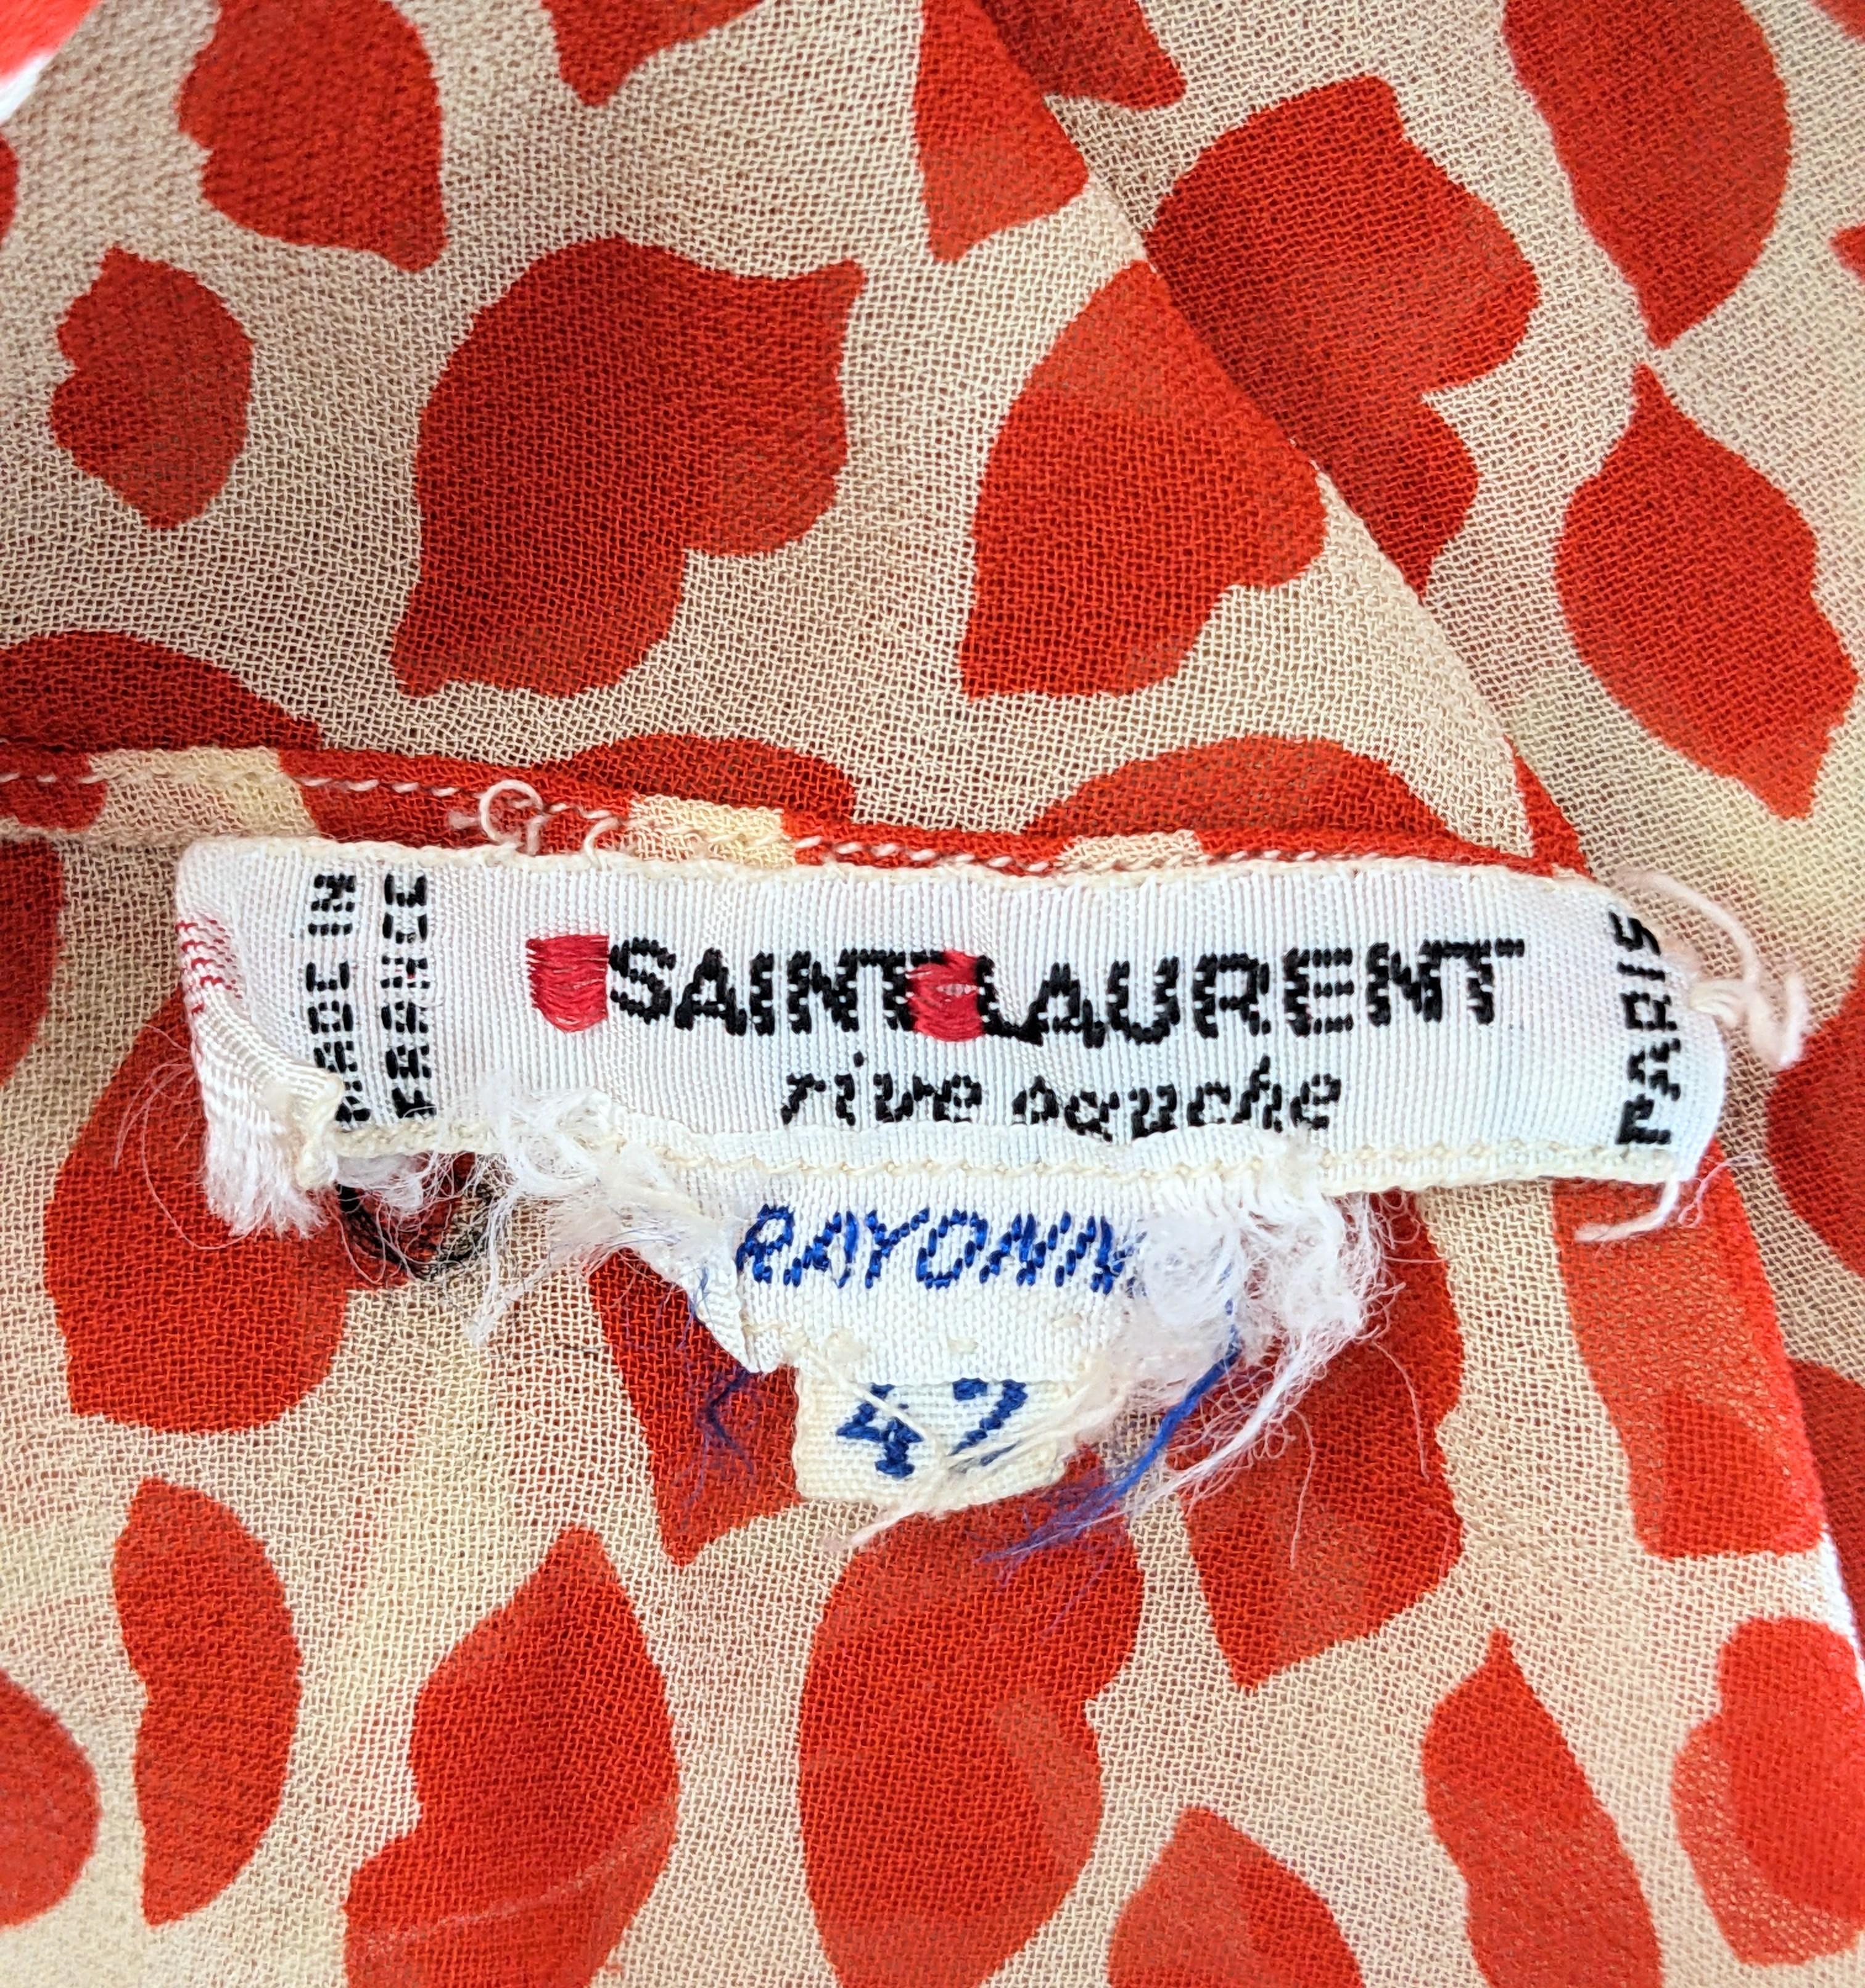 Iconic Yves Saint Laurent 